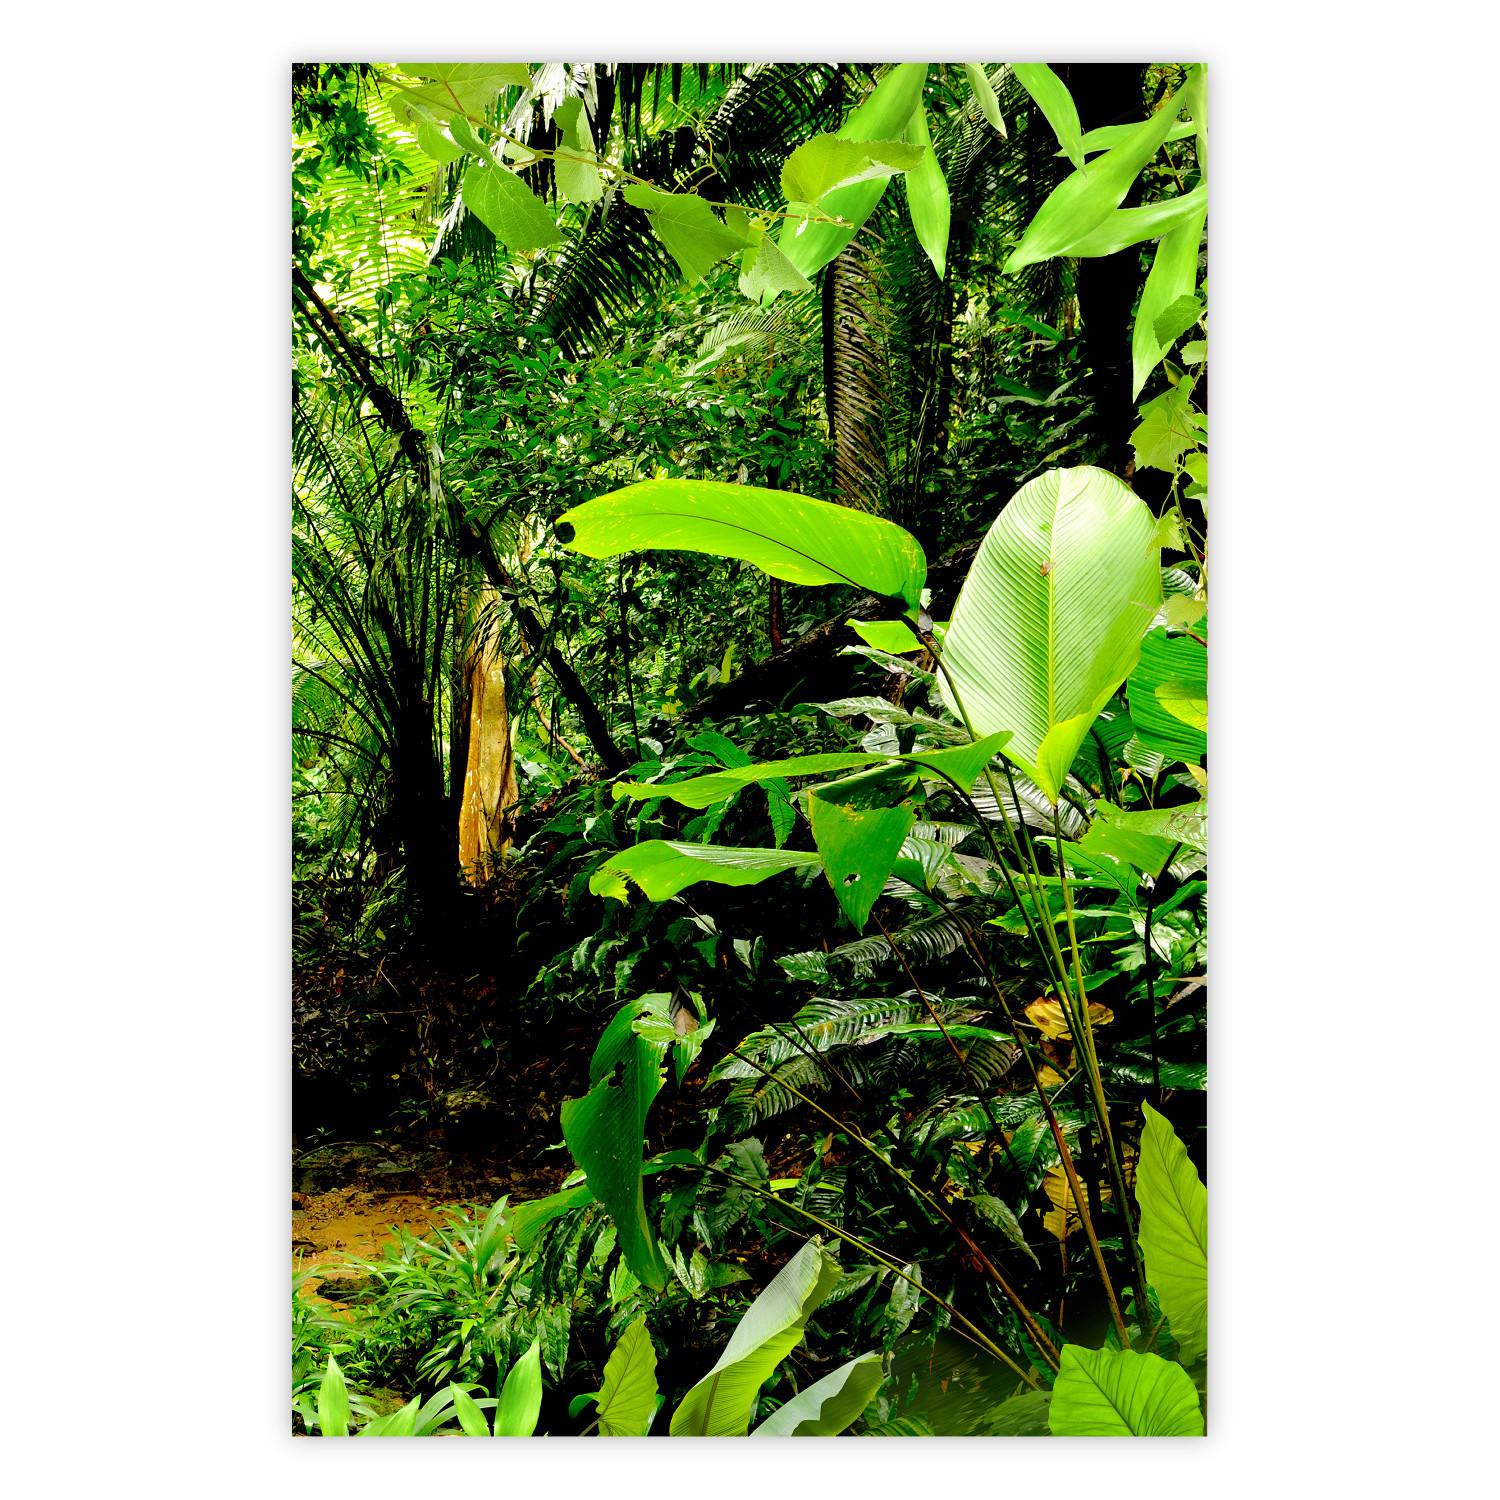 Póster Pulmones de la tierra - paisaje de jungla (Hojas verdes densas)